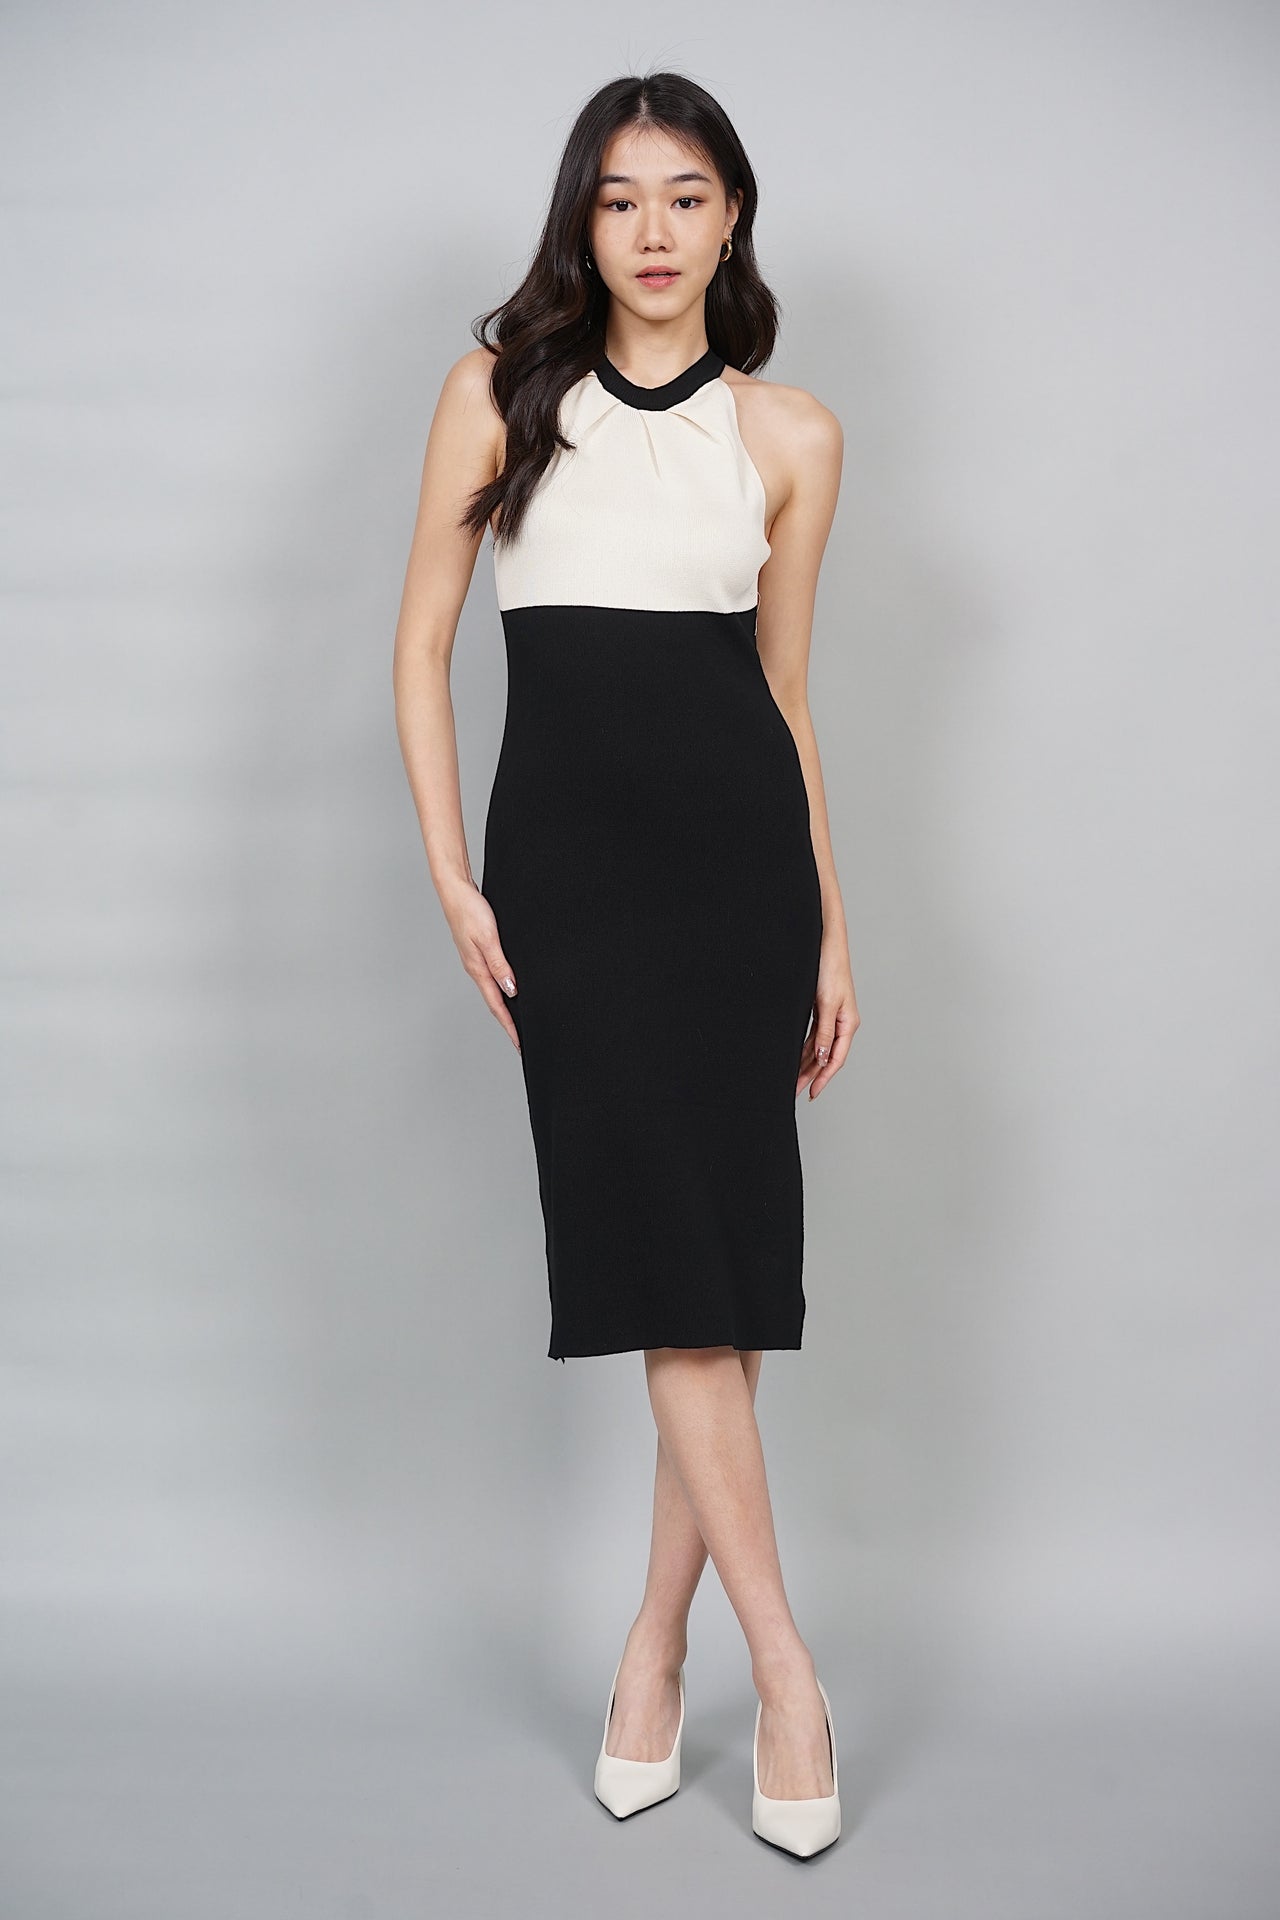 EVERYDAY / Jacinta Contrast Dress in Cream Black